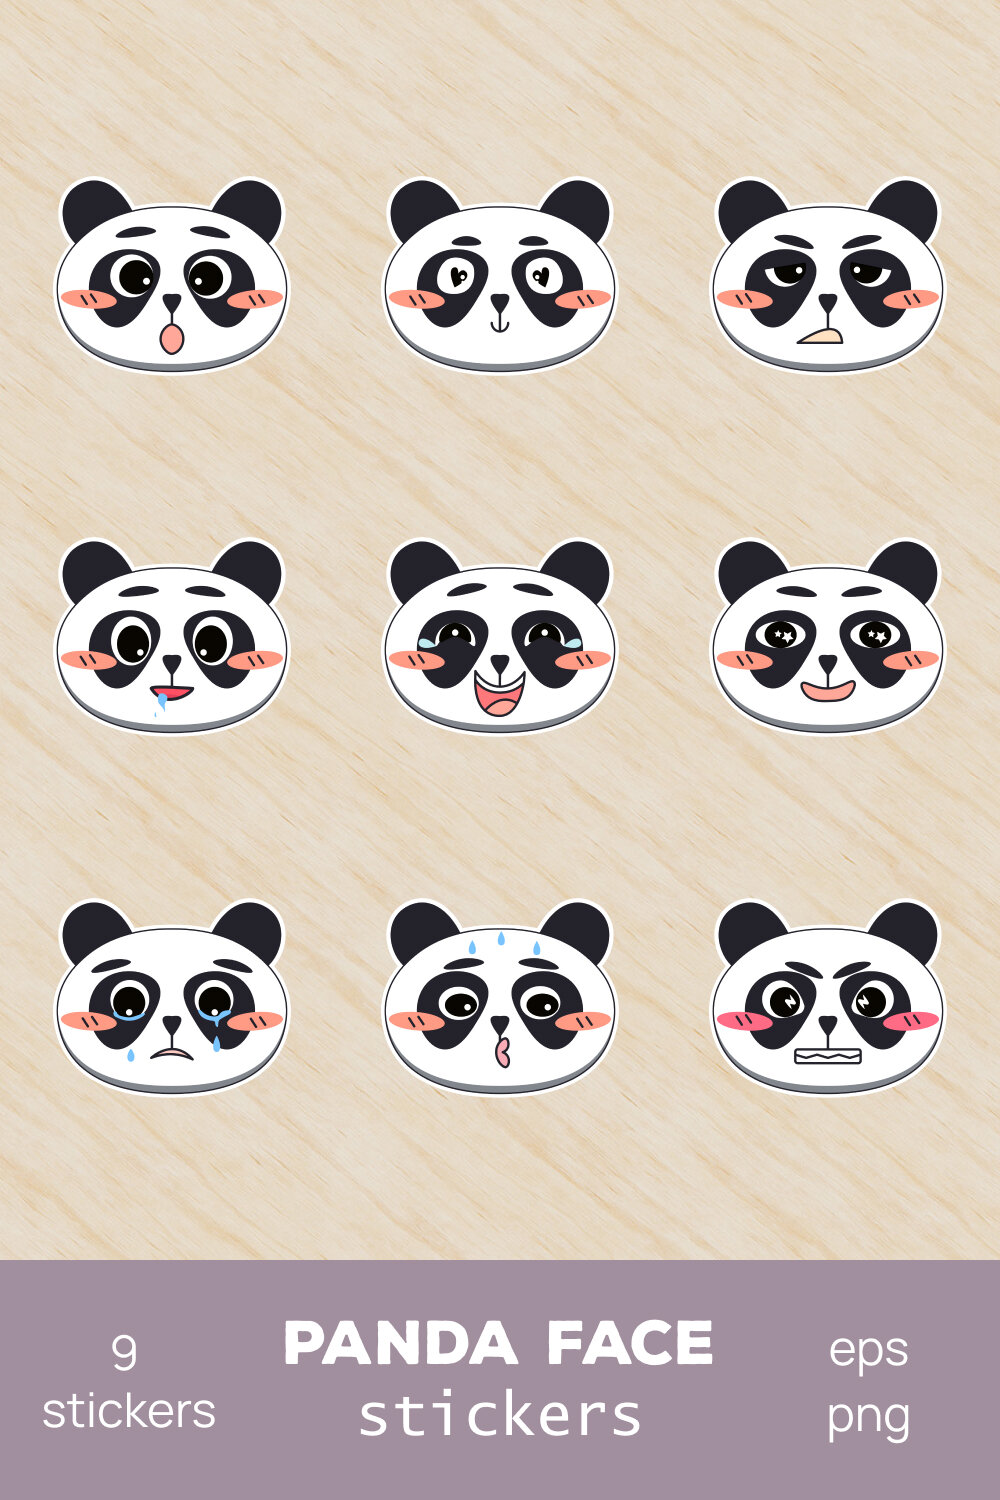 Panda Face Stickers pinterest image.